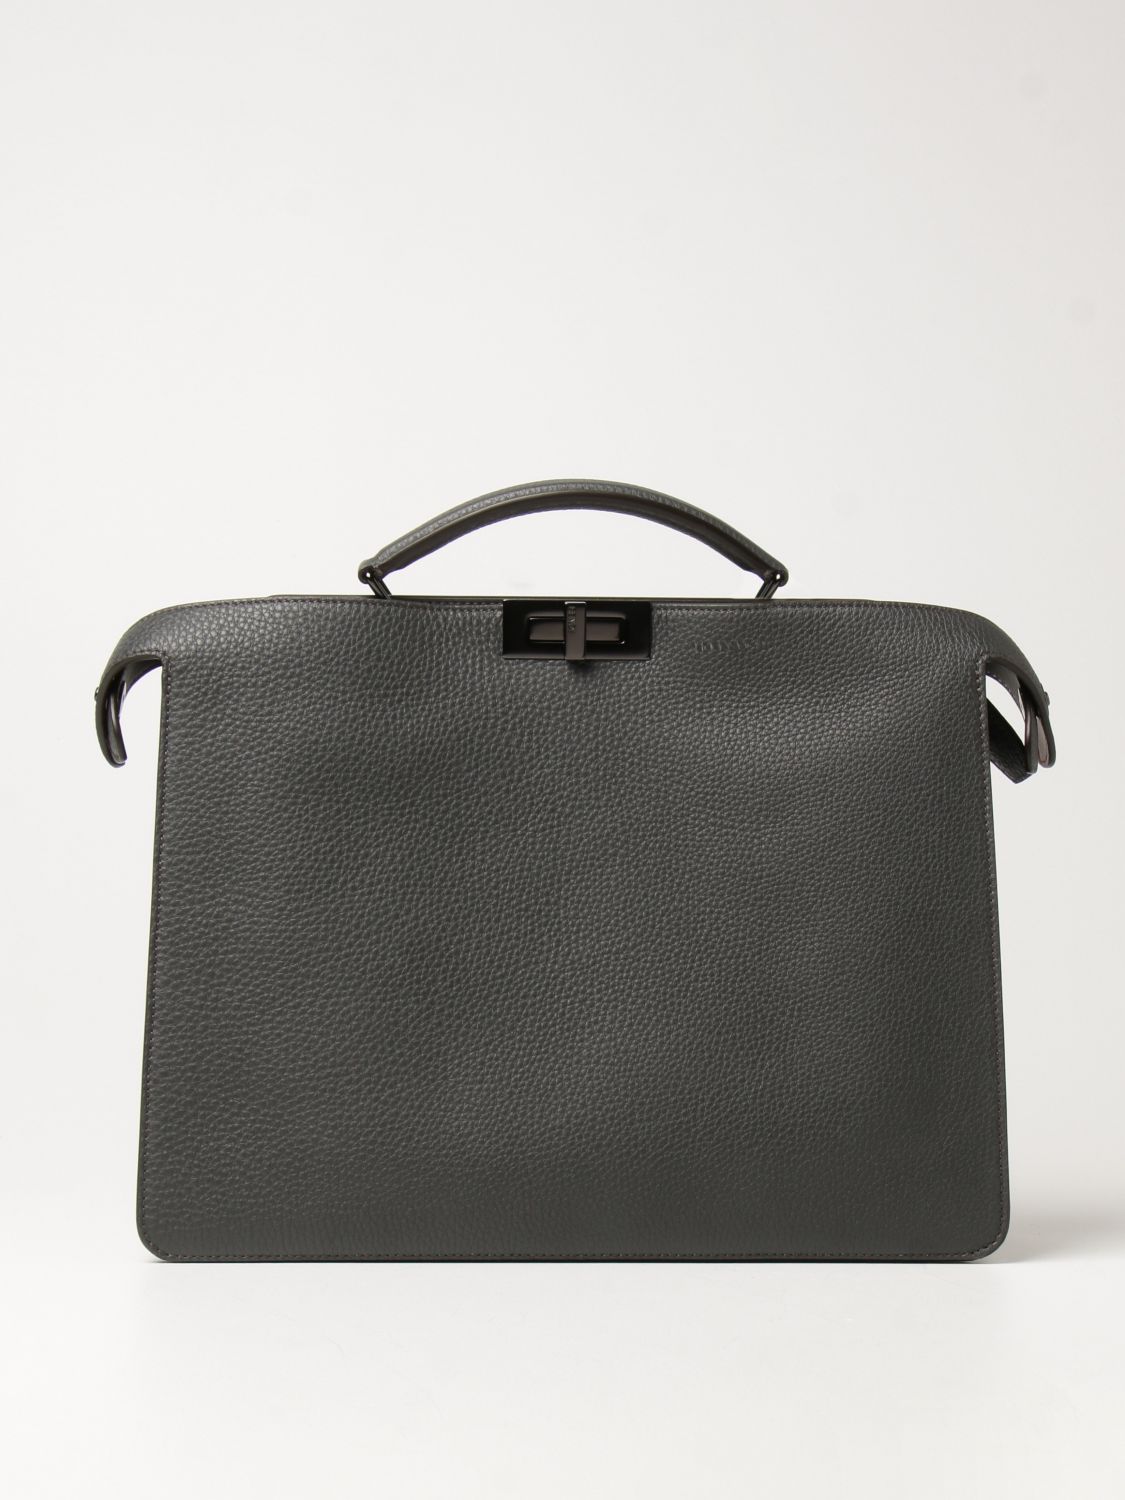 FENDI: ISeeU Peekaboo bag in textured leather - Black | Fendi 